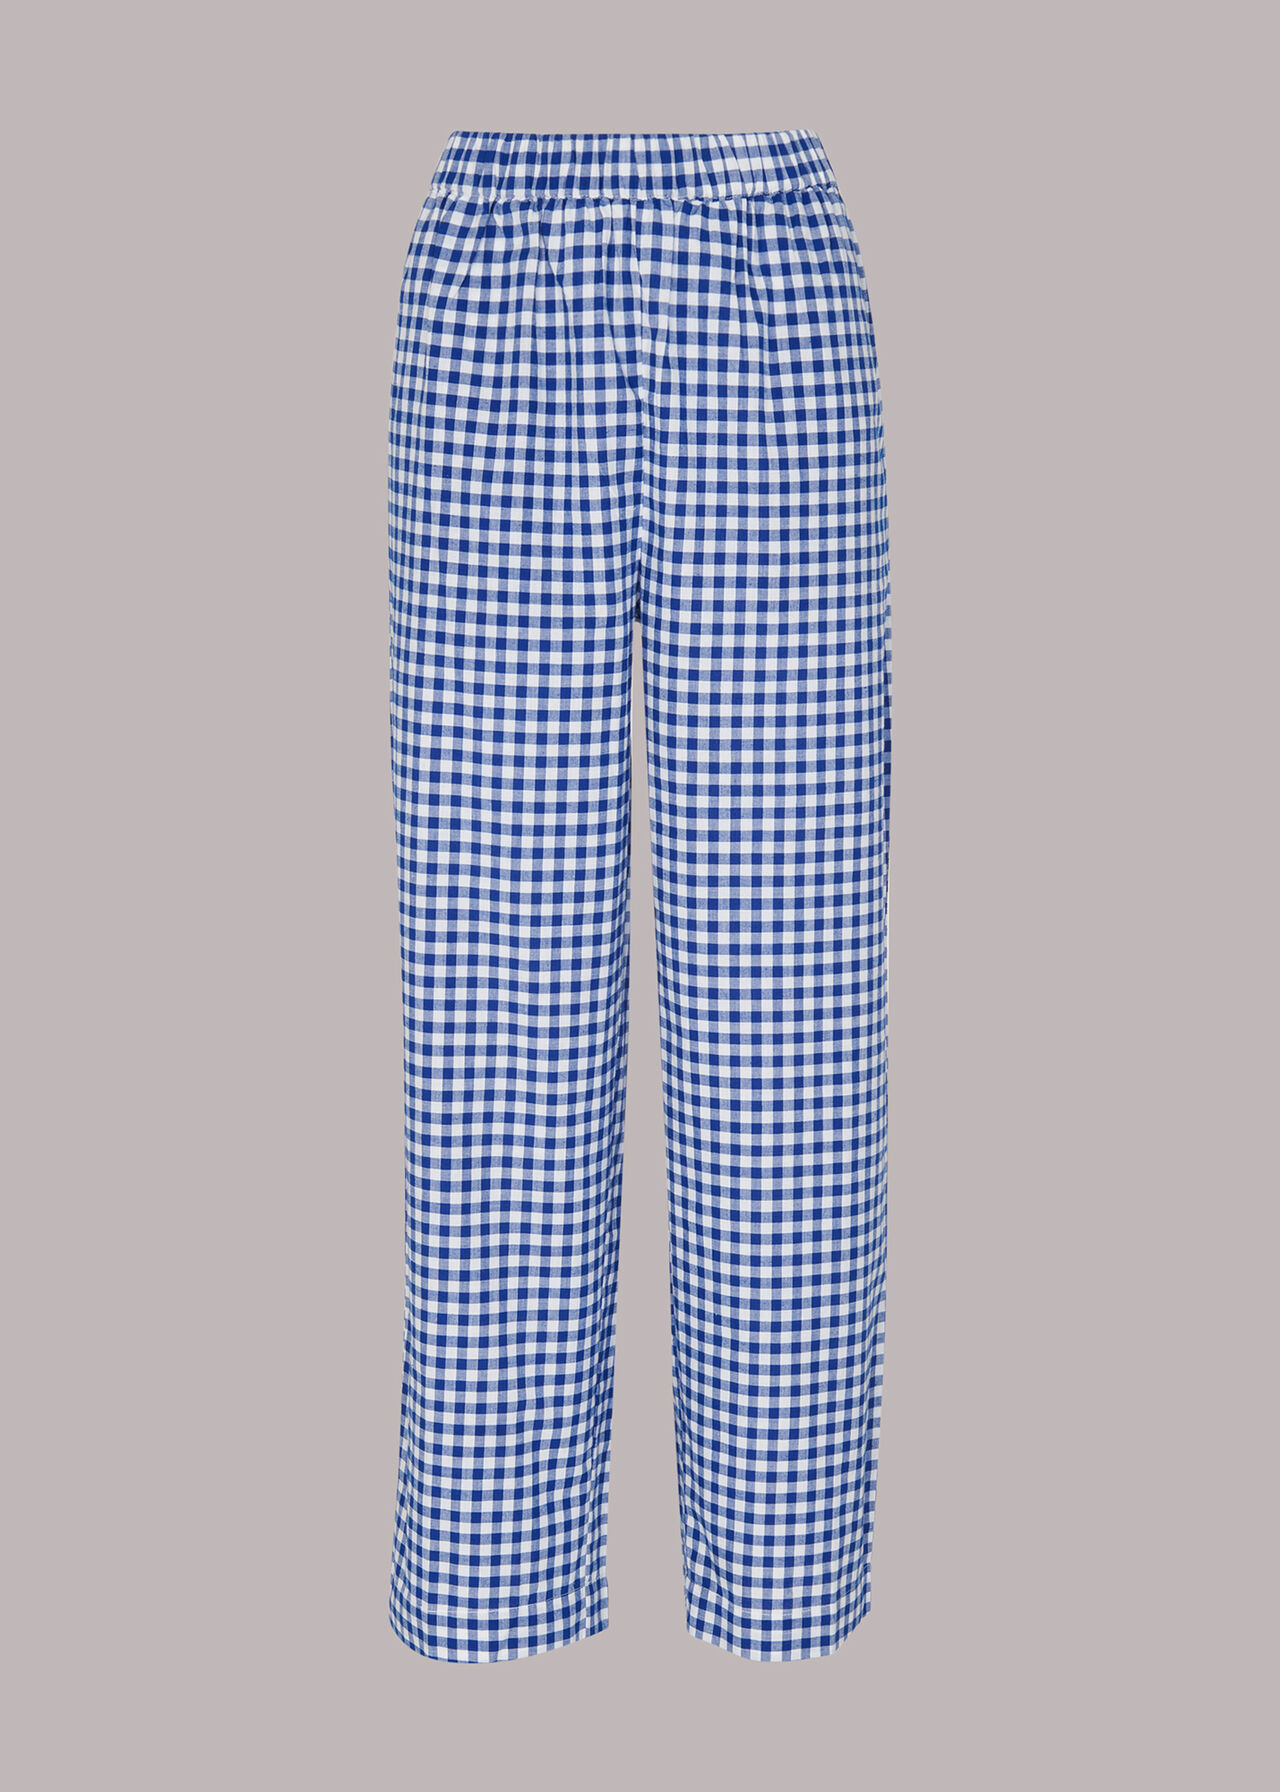 Gingham Collar Pyjamas